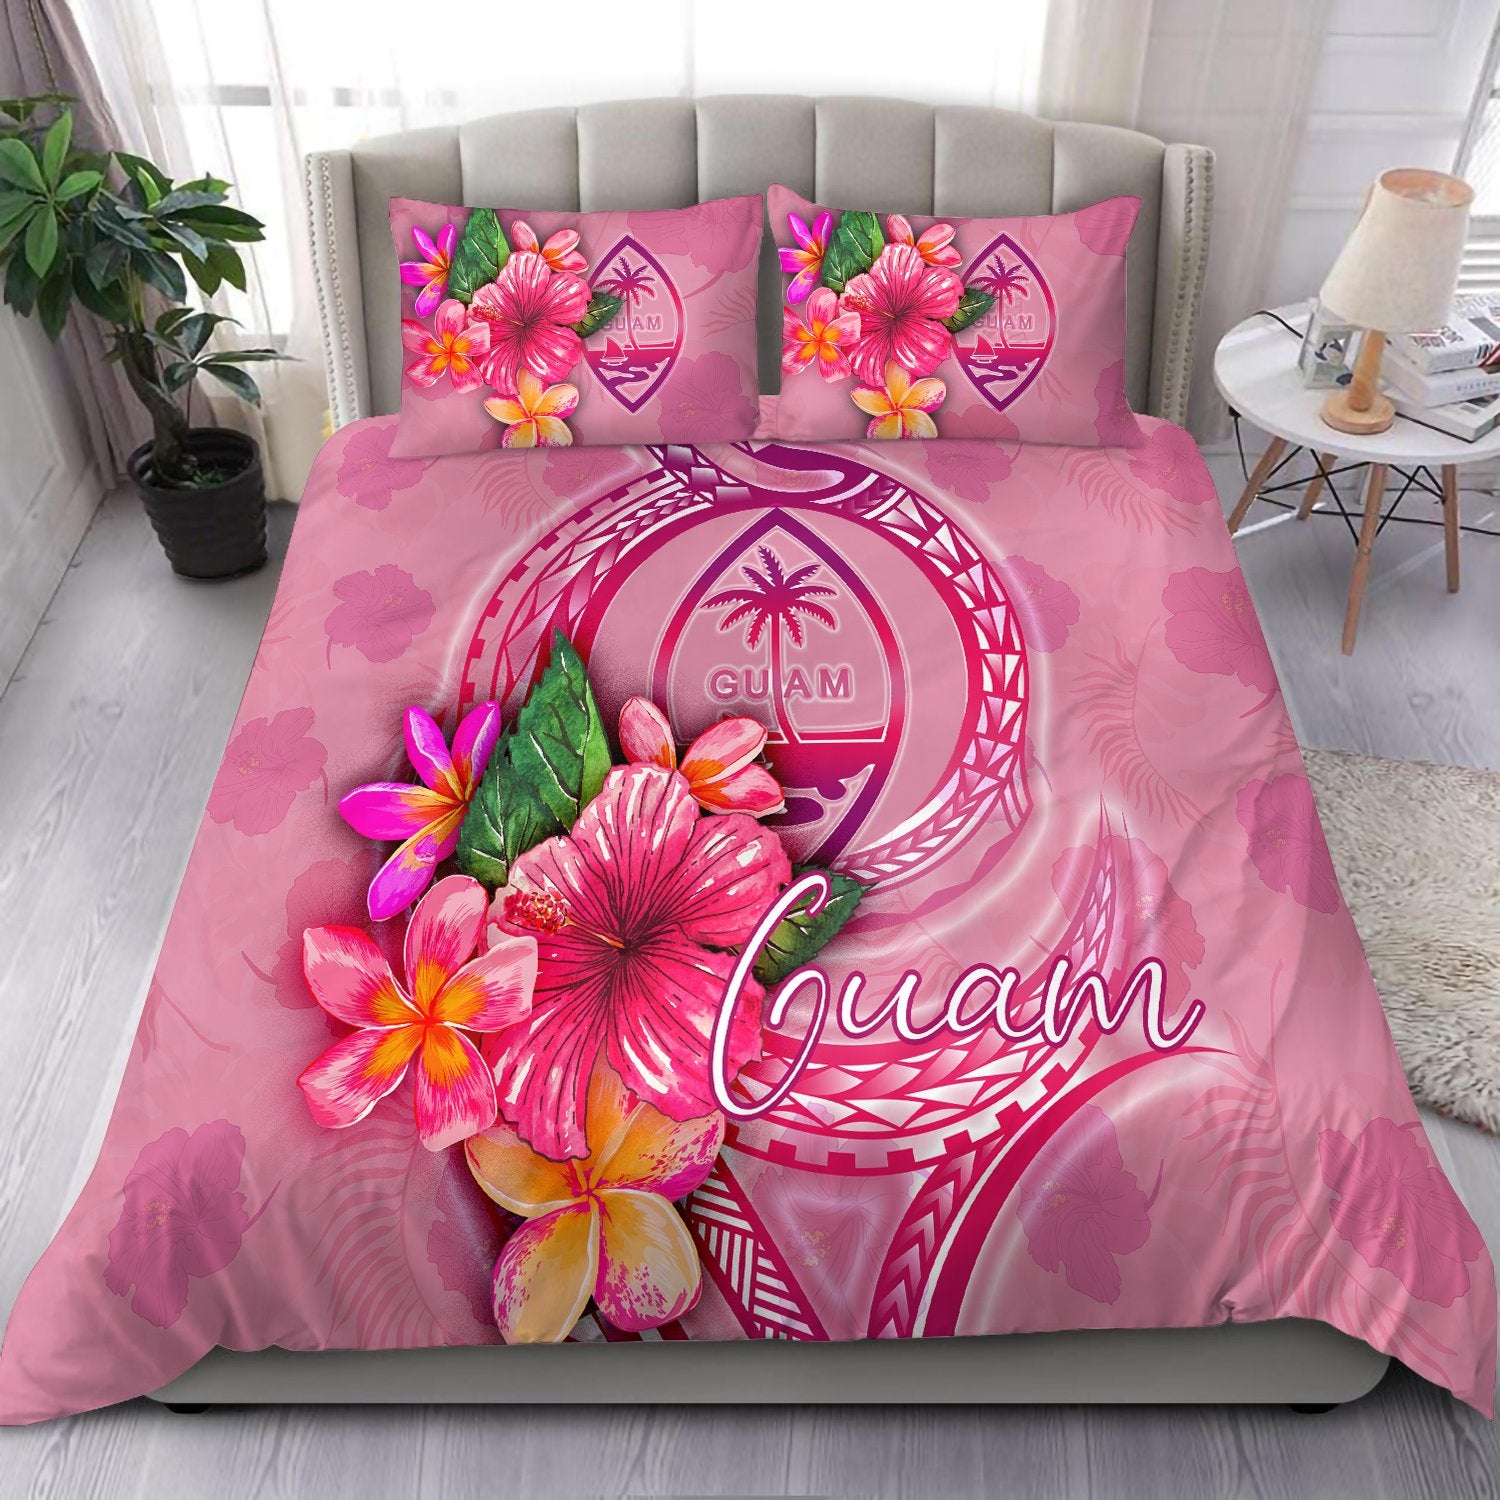 Guam Polynesian Bedding Set - Floral With Seal Pink Pink - Polynesian Pride